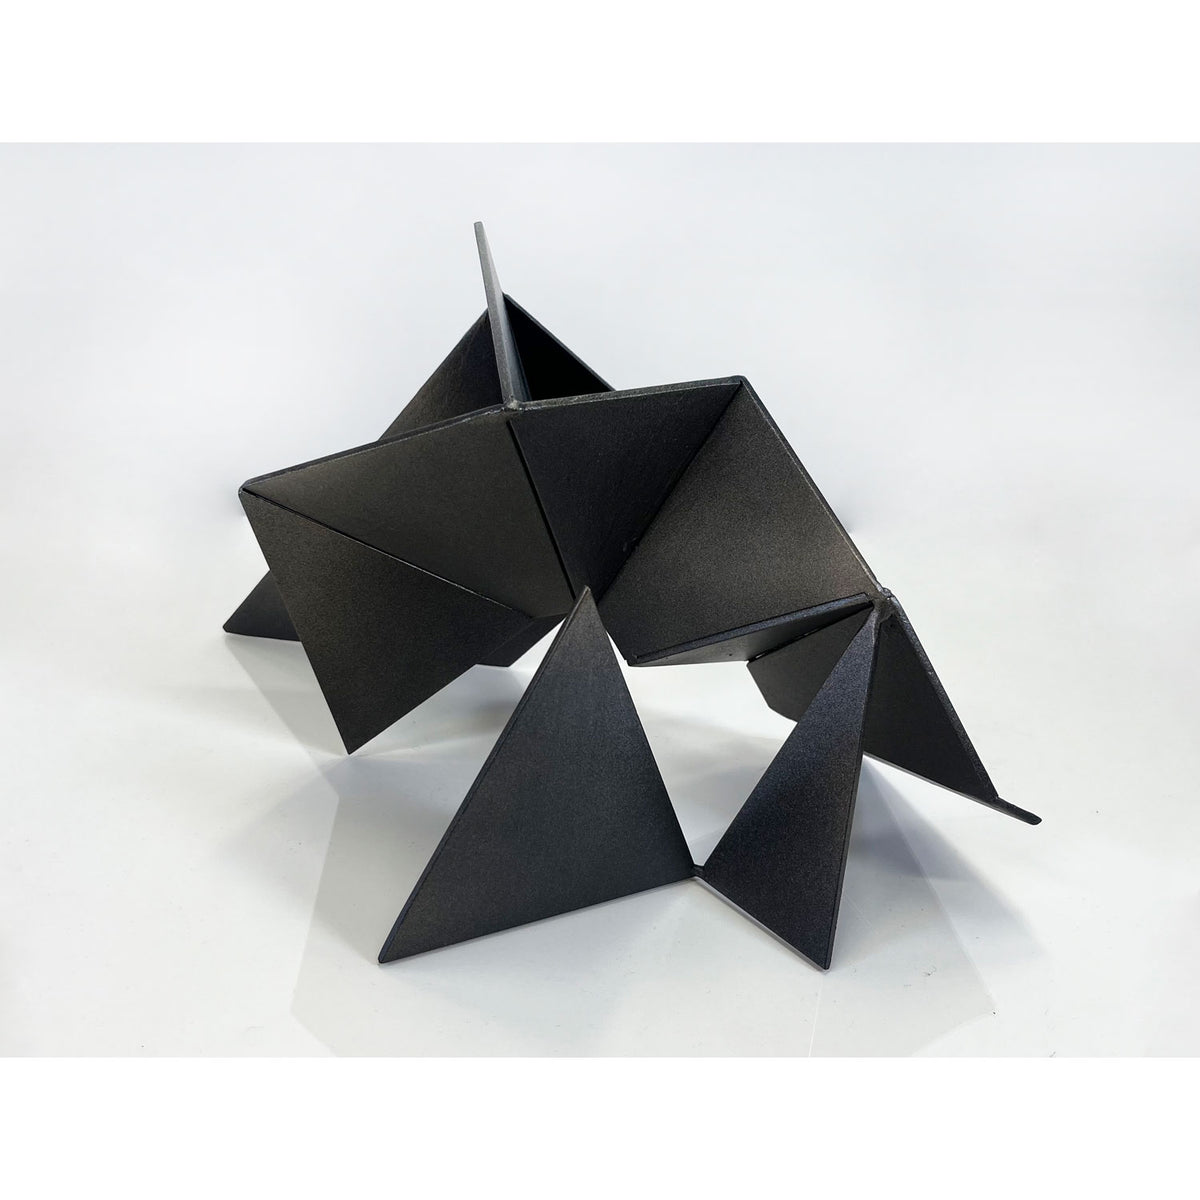 Slavo Cech - Black Geometry V, 9.5" x 15.5" x 9"